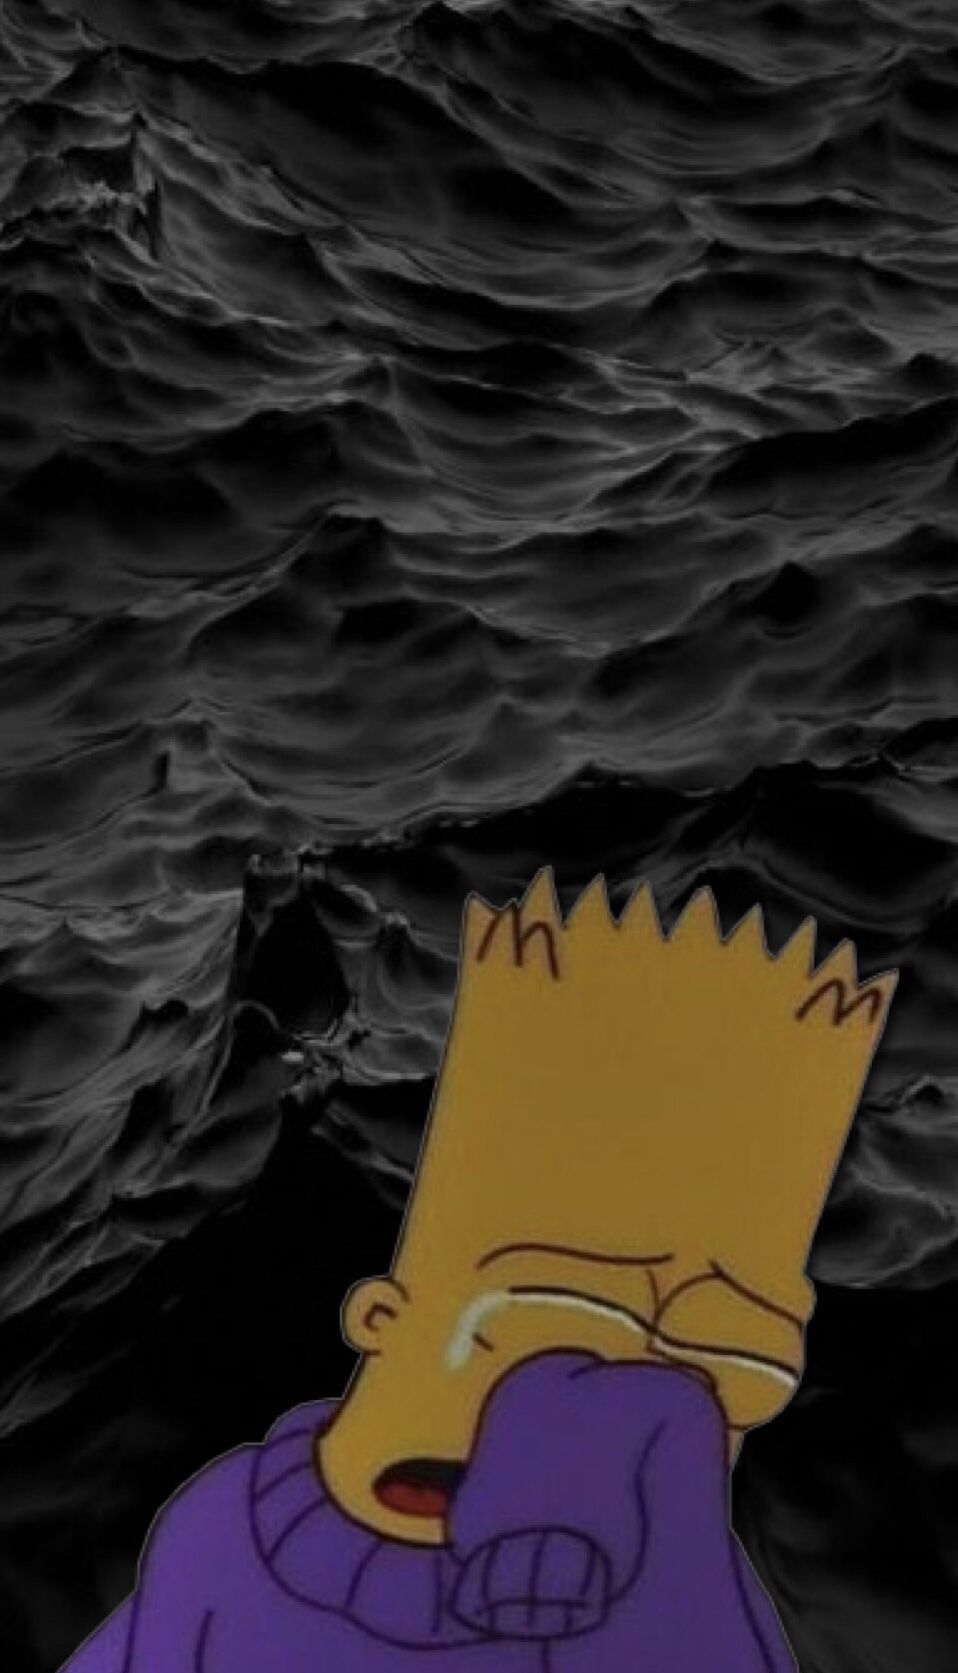 Sad Simpsons Wallpapers